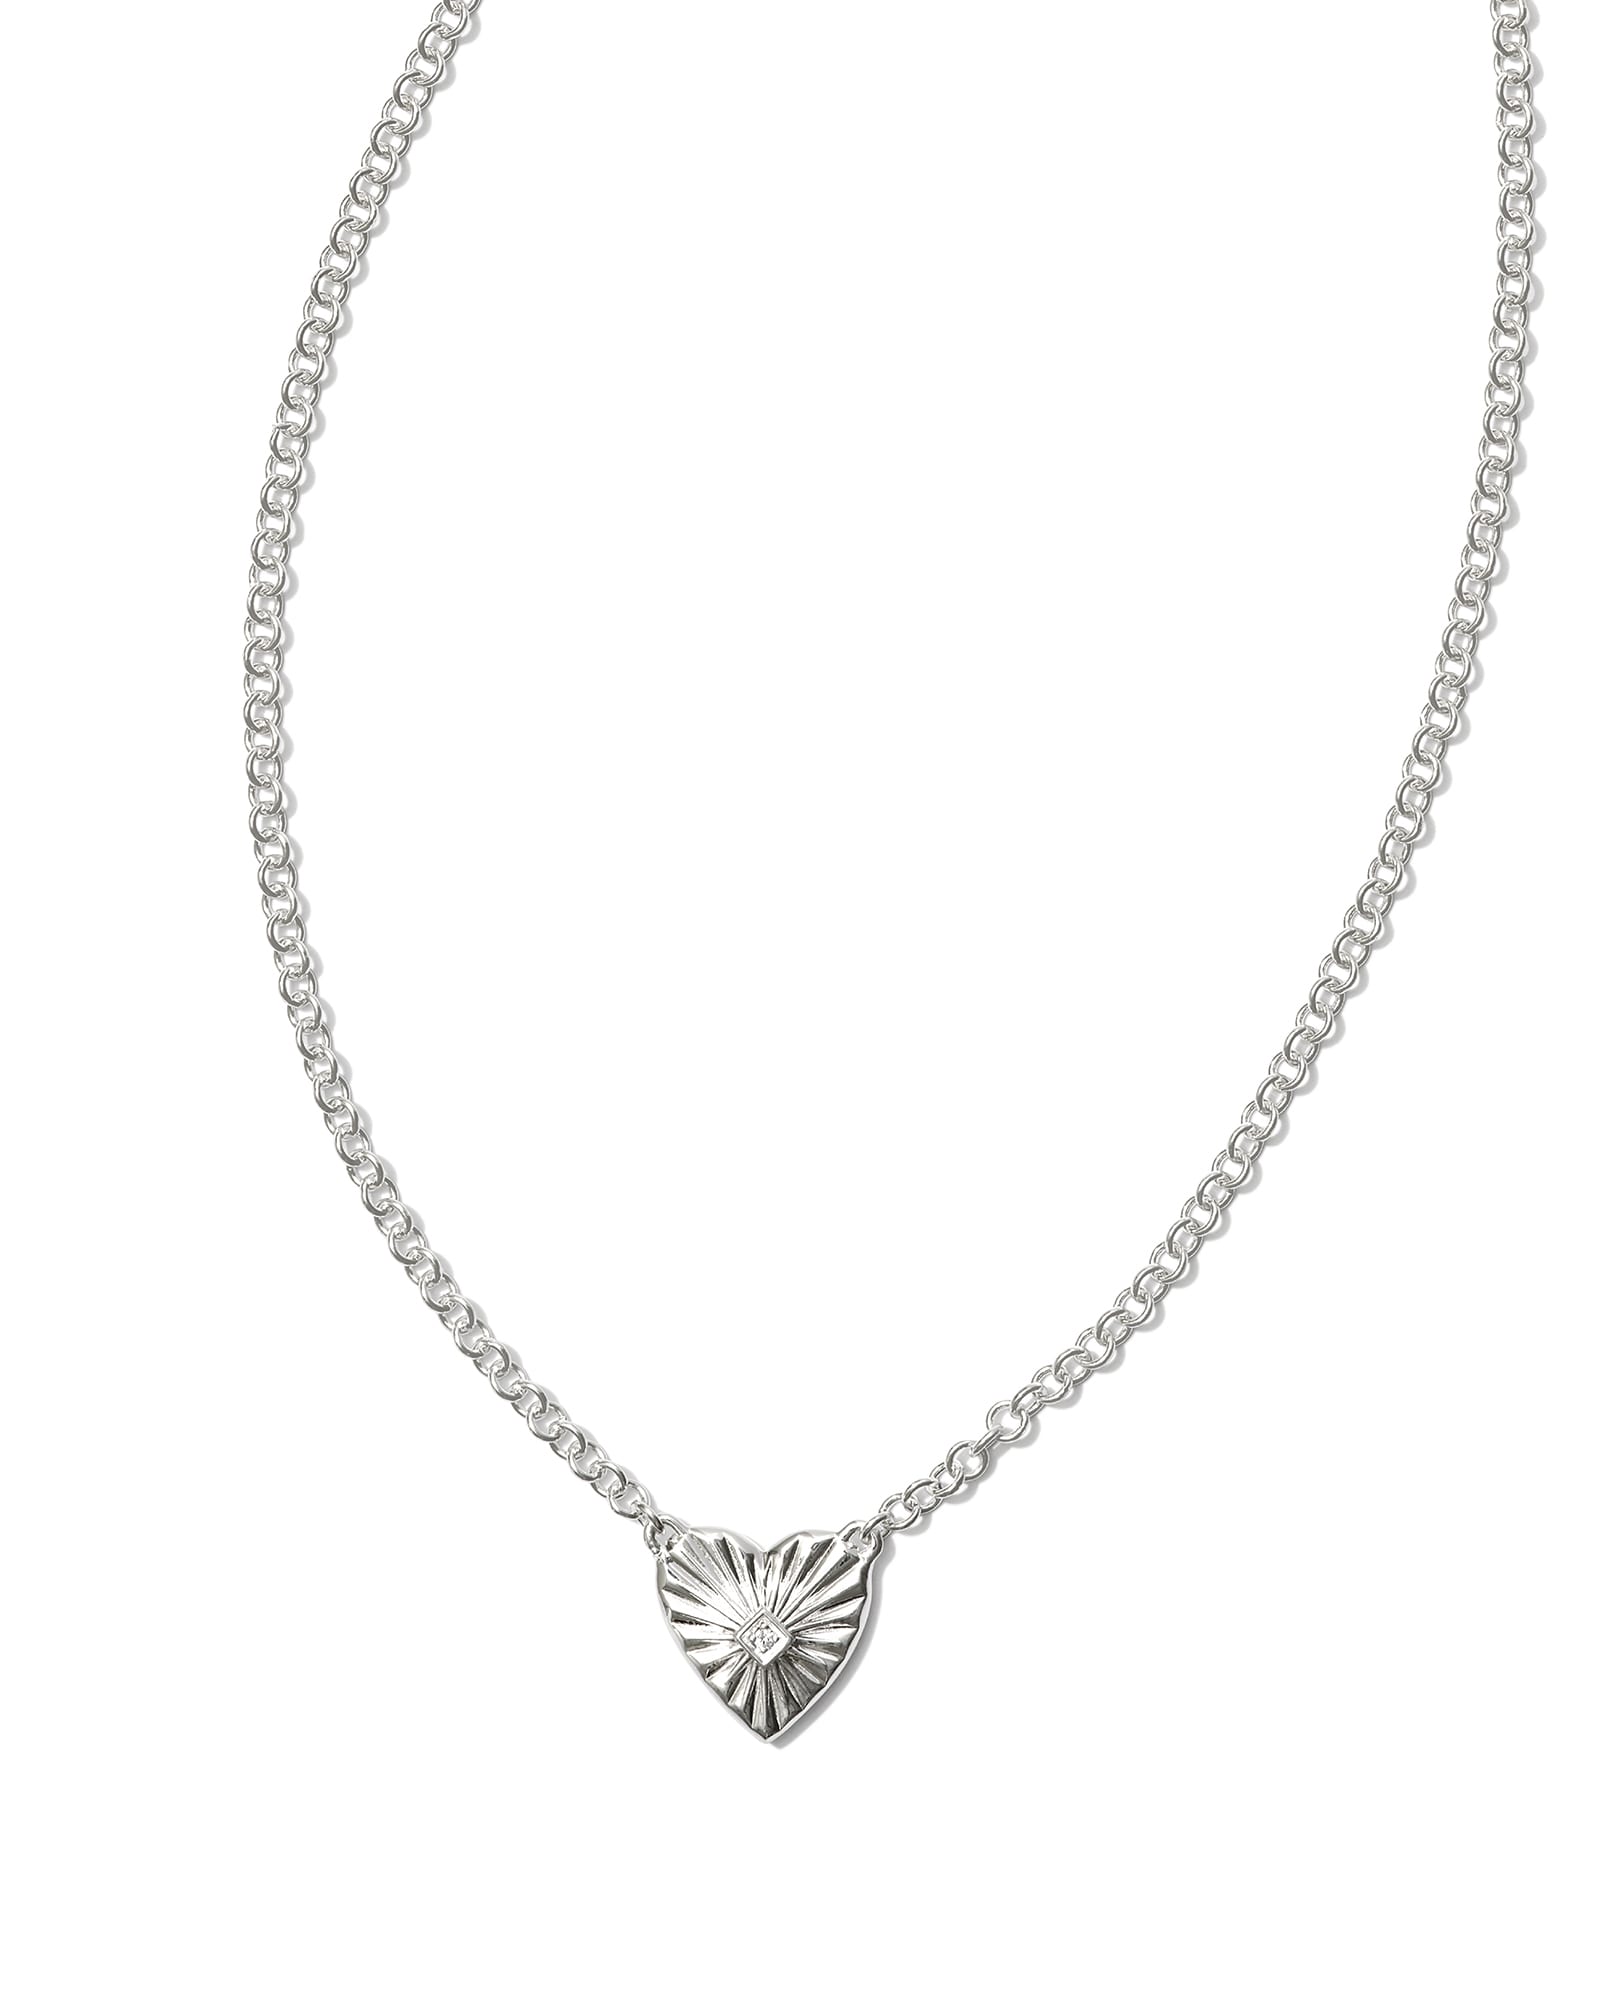 Maia Sterling Silver Heartburst Pendant Necklace in White Sapphire